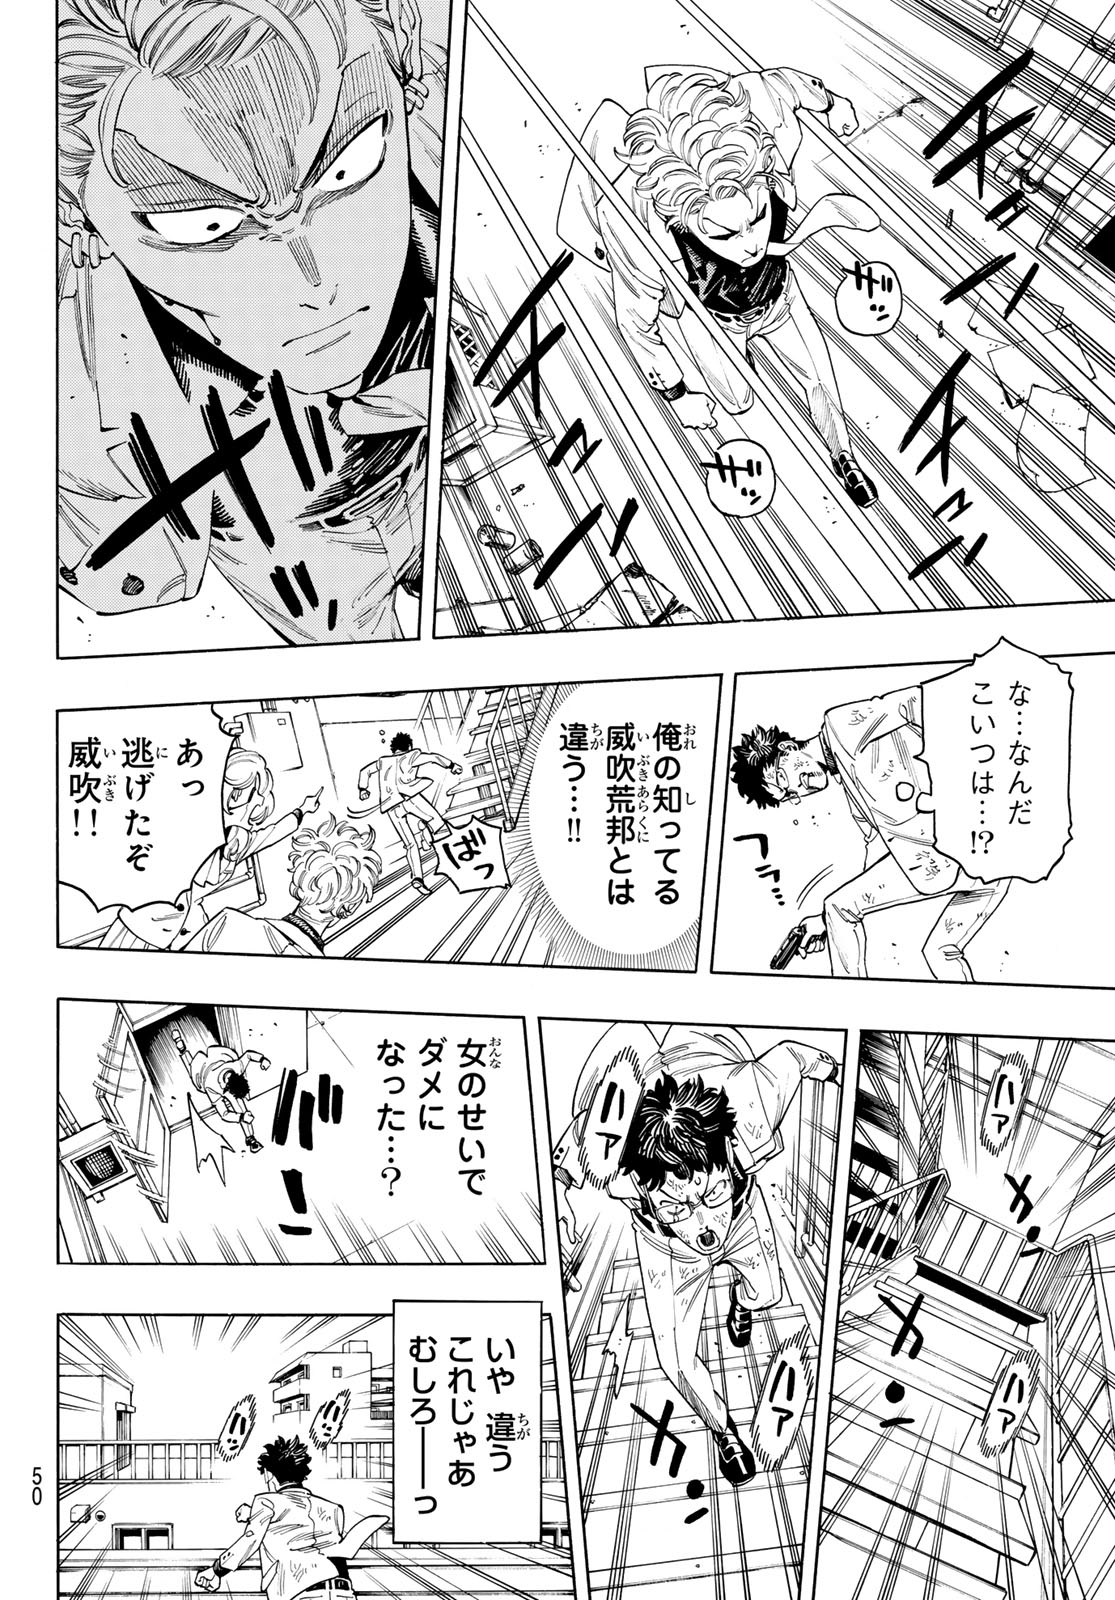 Akabane Honeko no Bodyguard - Chapter 79 - Page 4